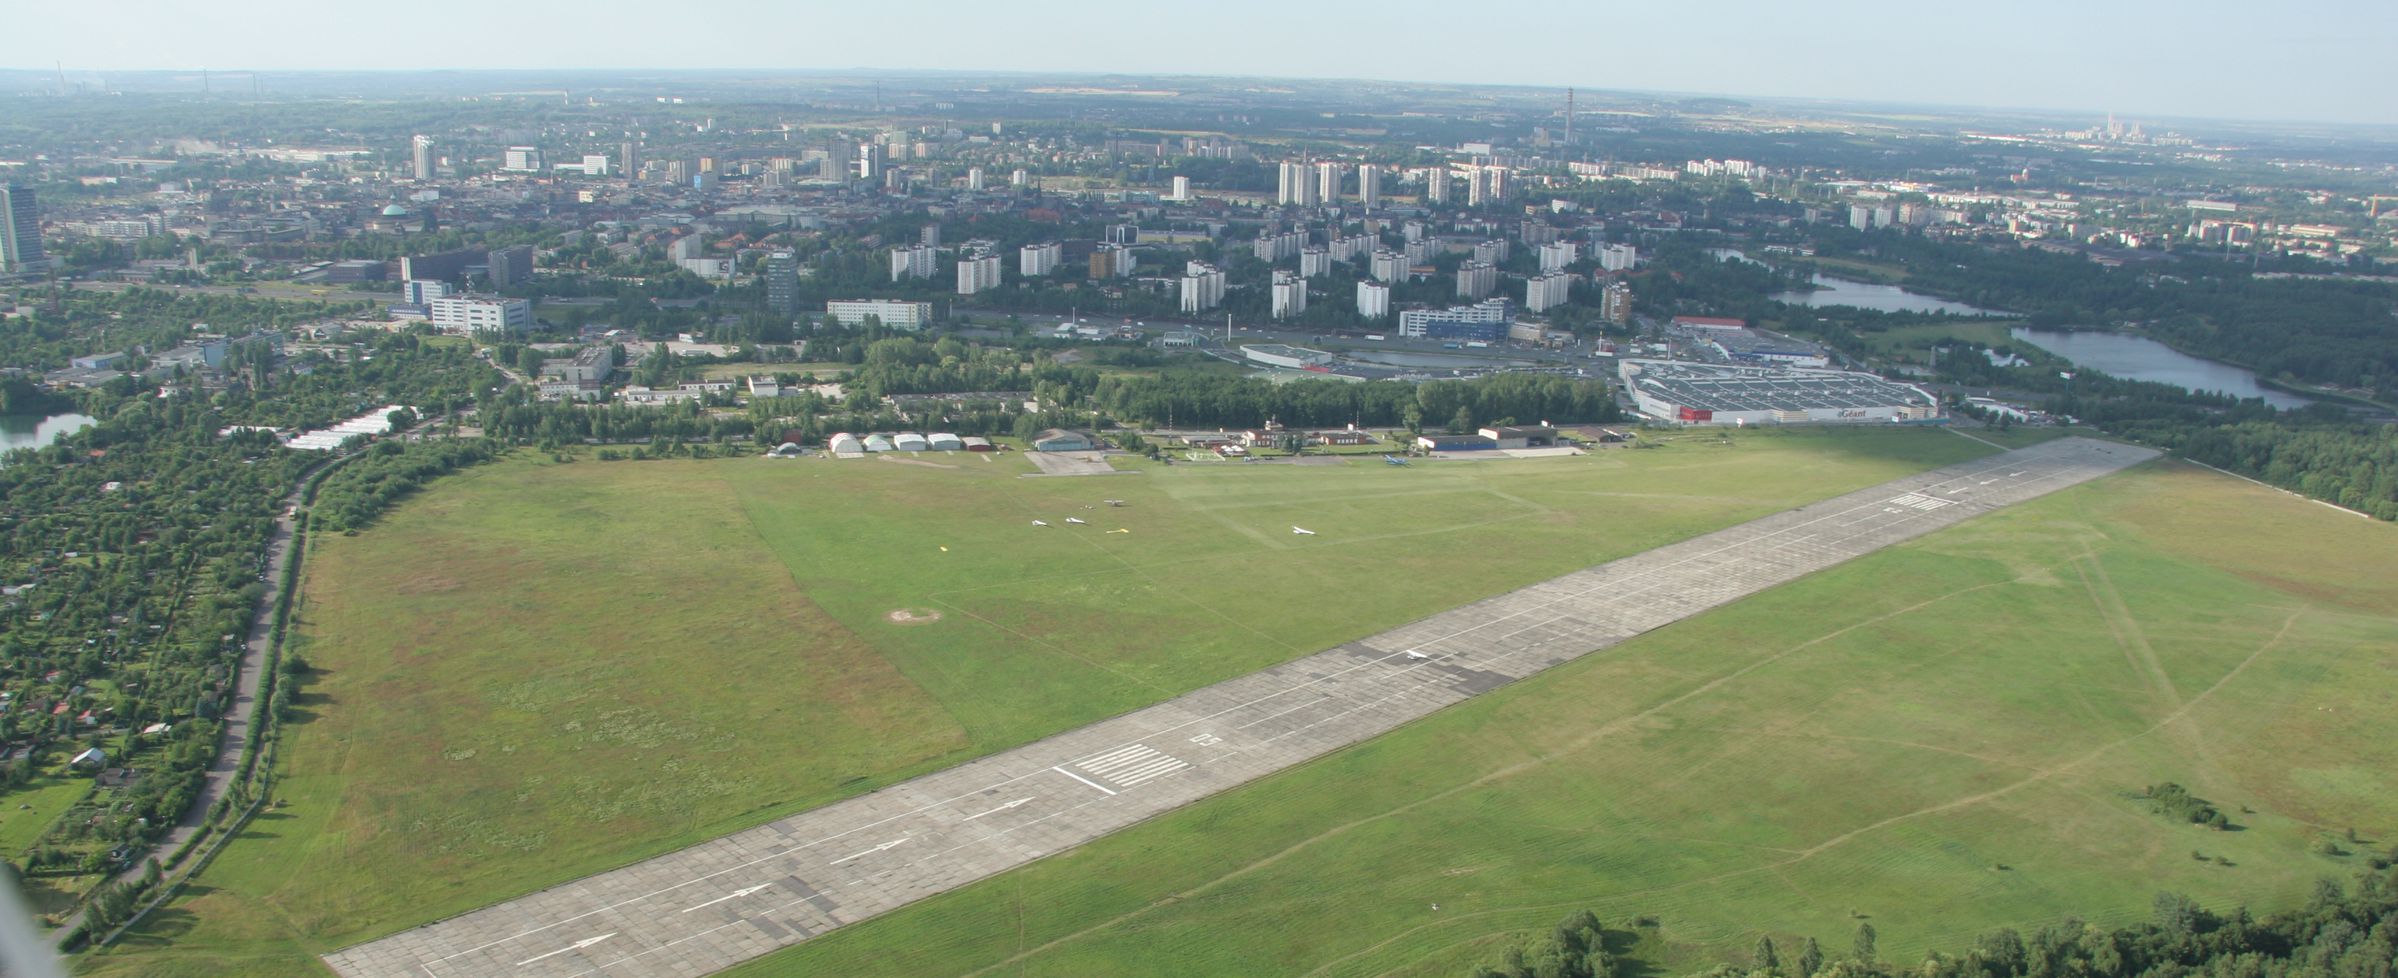 EPKM – Lotnisko Katowice Muchowiec